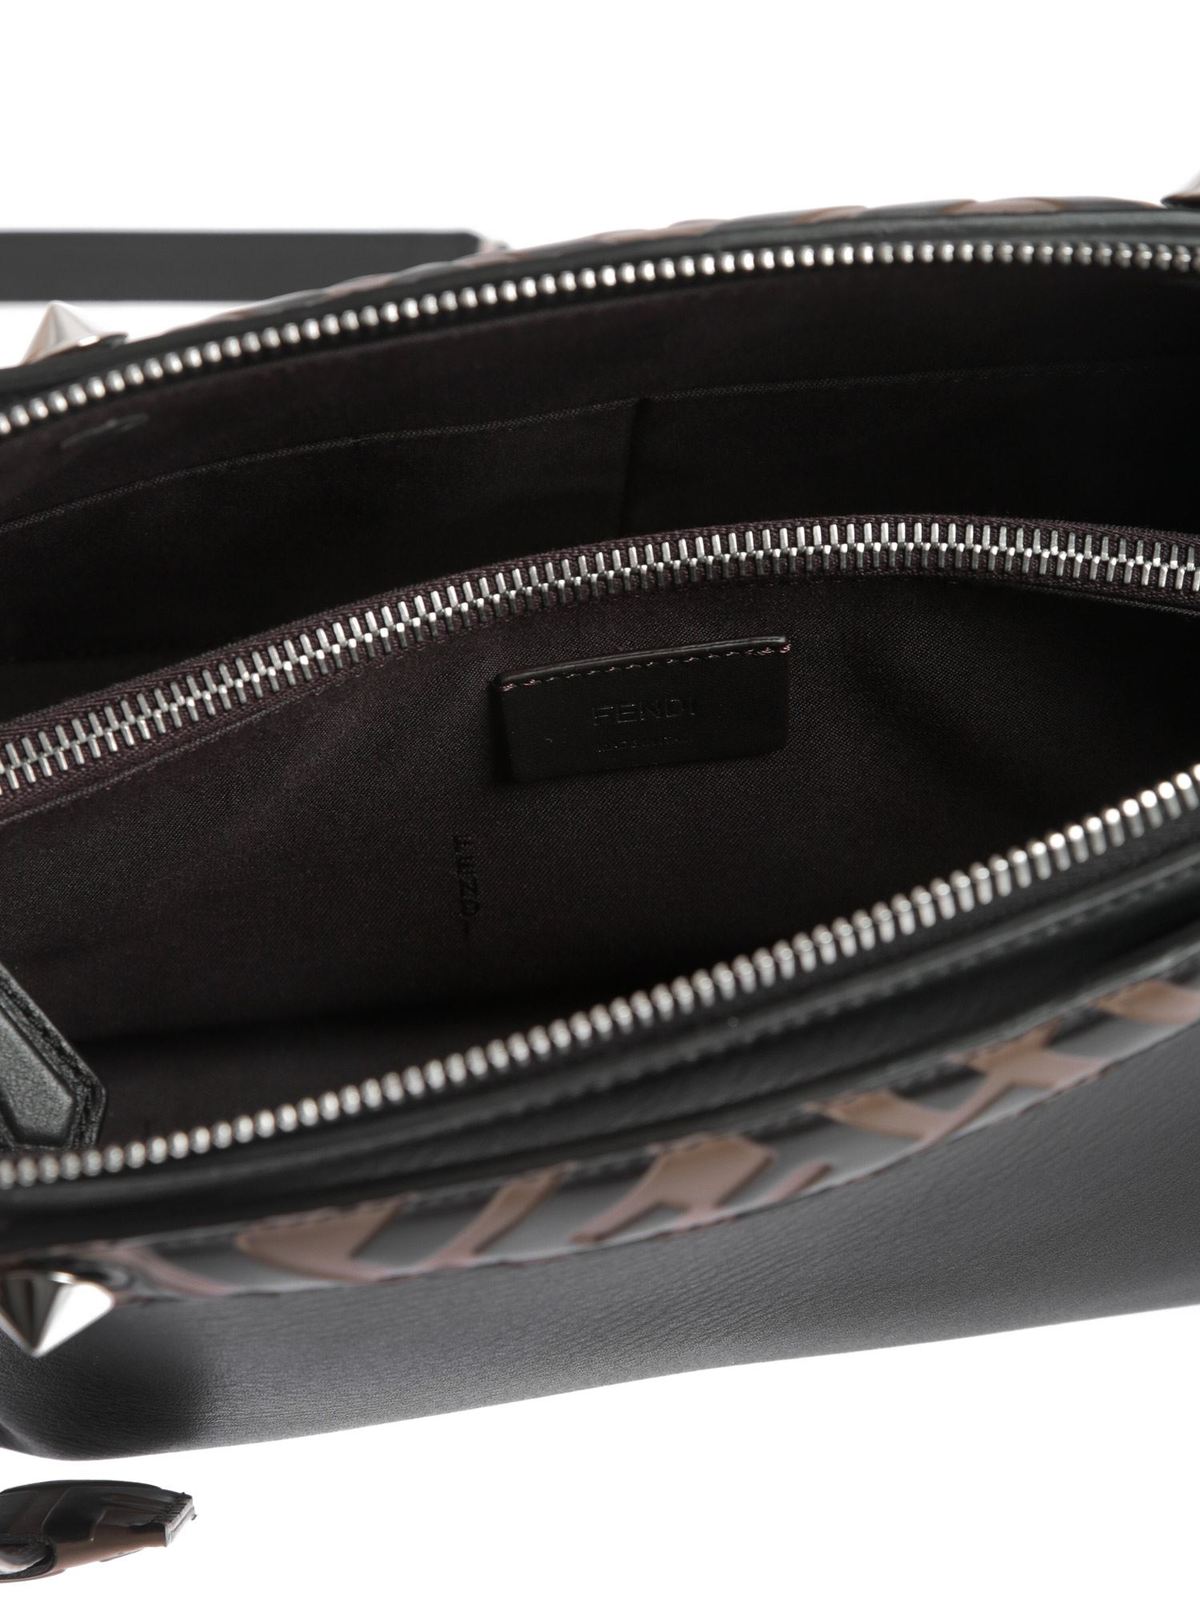 Fendi Black Leather Bags for Men for sale